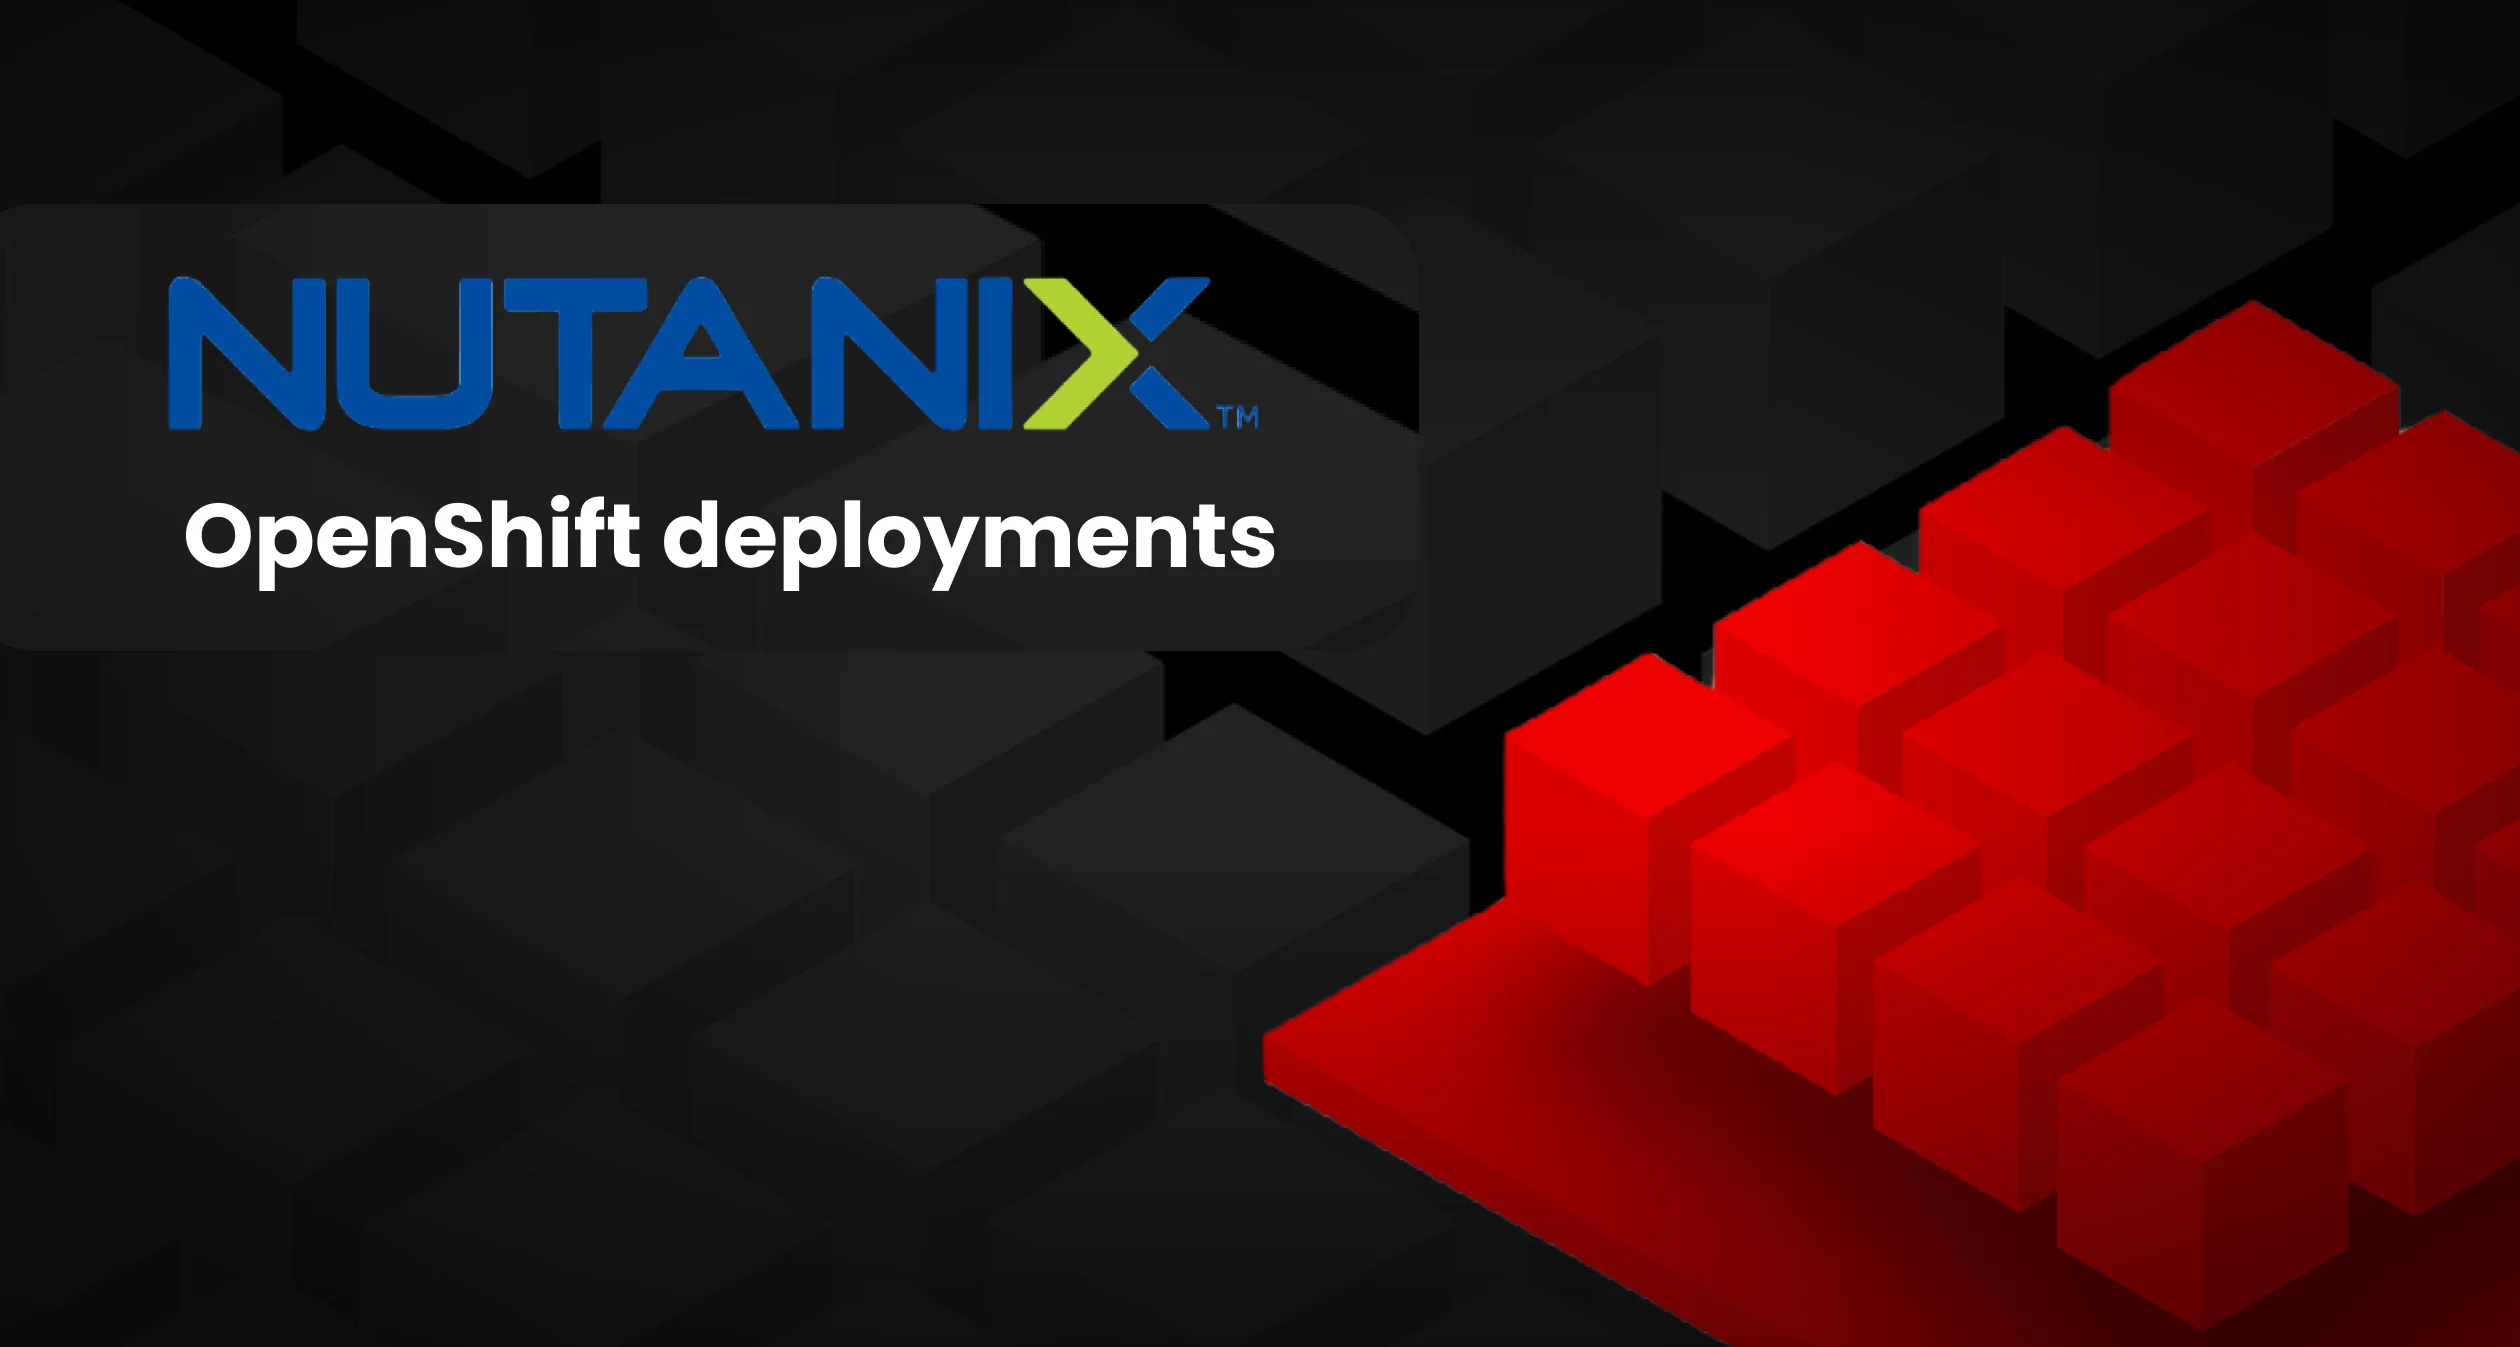 OpenShift deployments on Nutanix